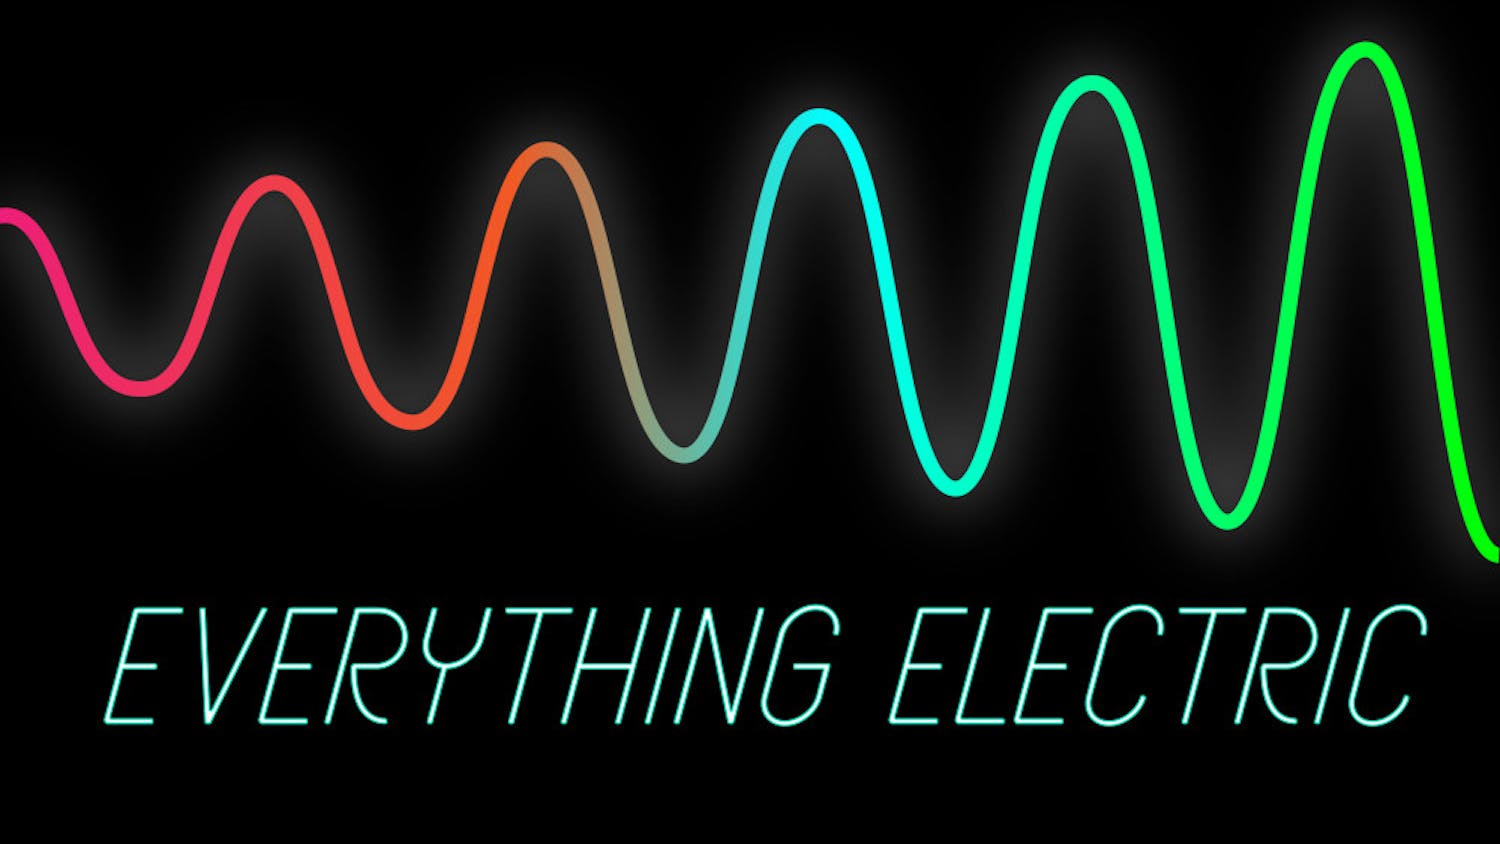 EverythingElectric-01-1